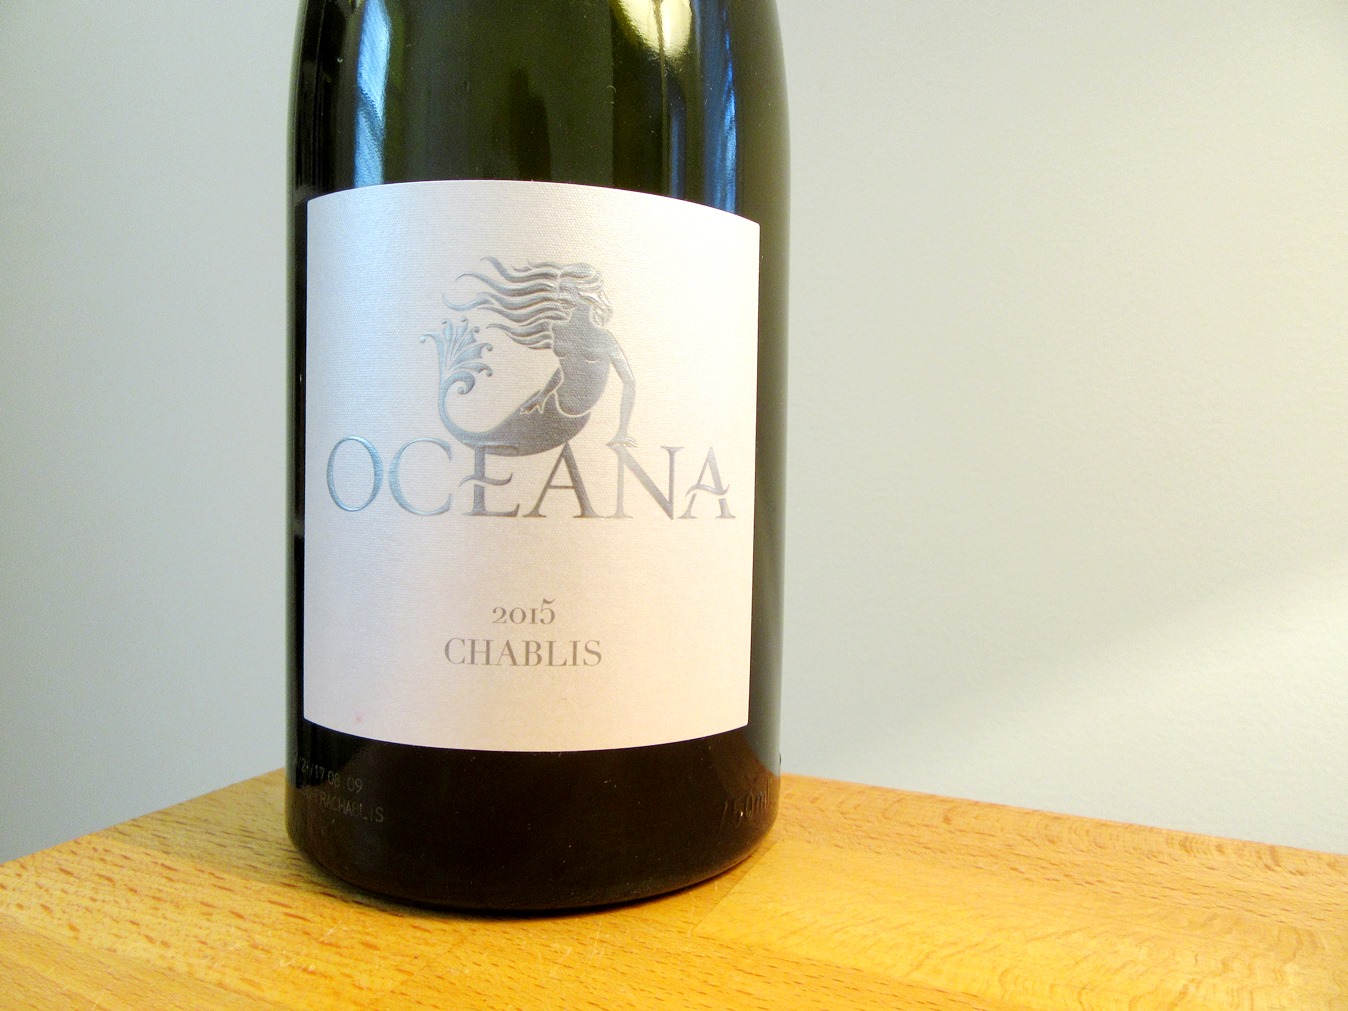 Oceana, Chablis 2015, Burgundy, France, Wine Casual